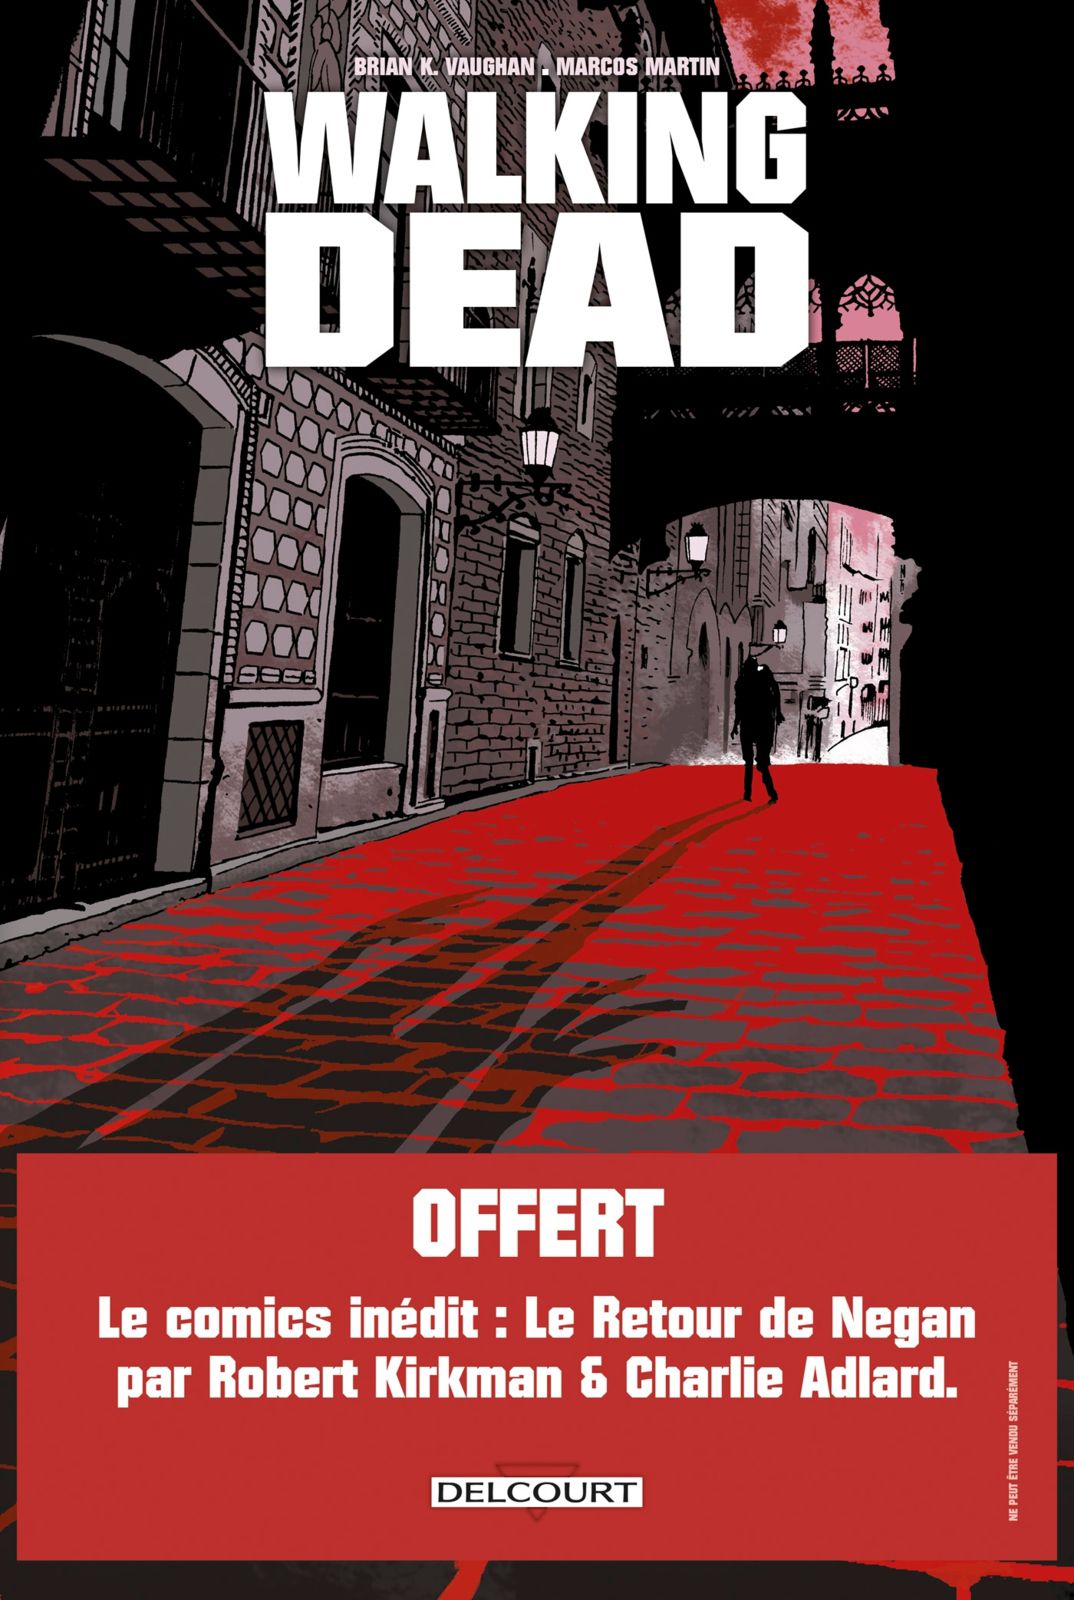 Walking Dead L’étranger (Brian Vaughan & Marcos Martin)